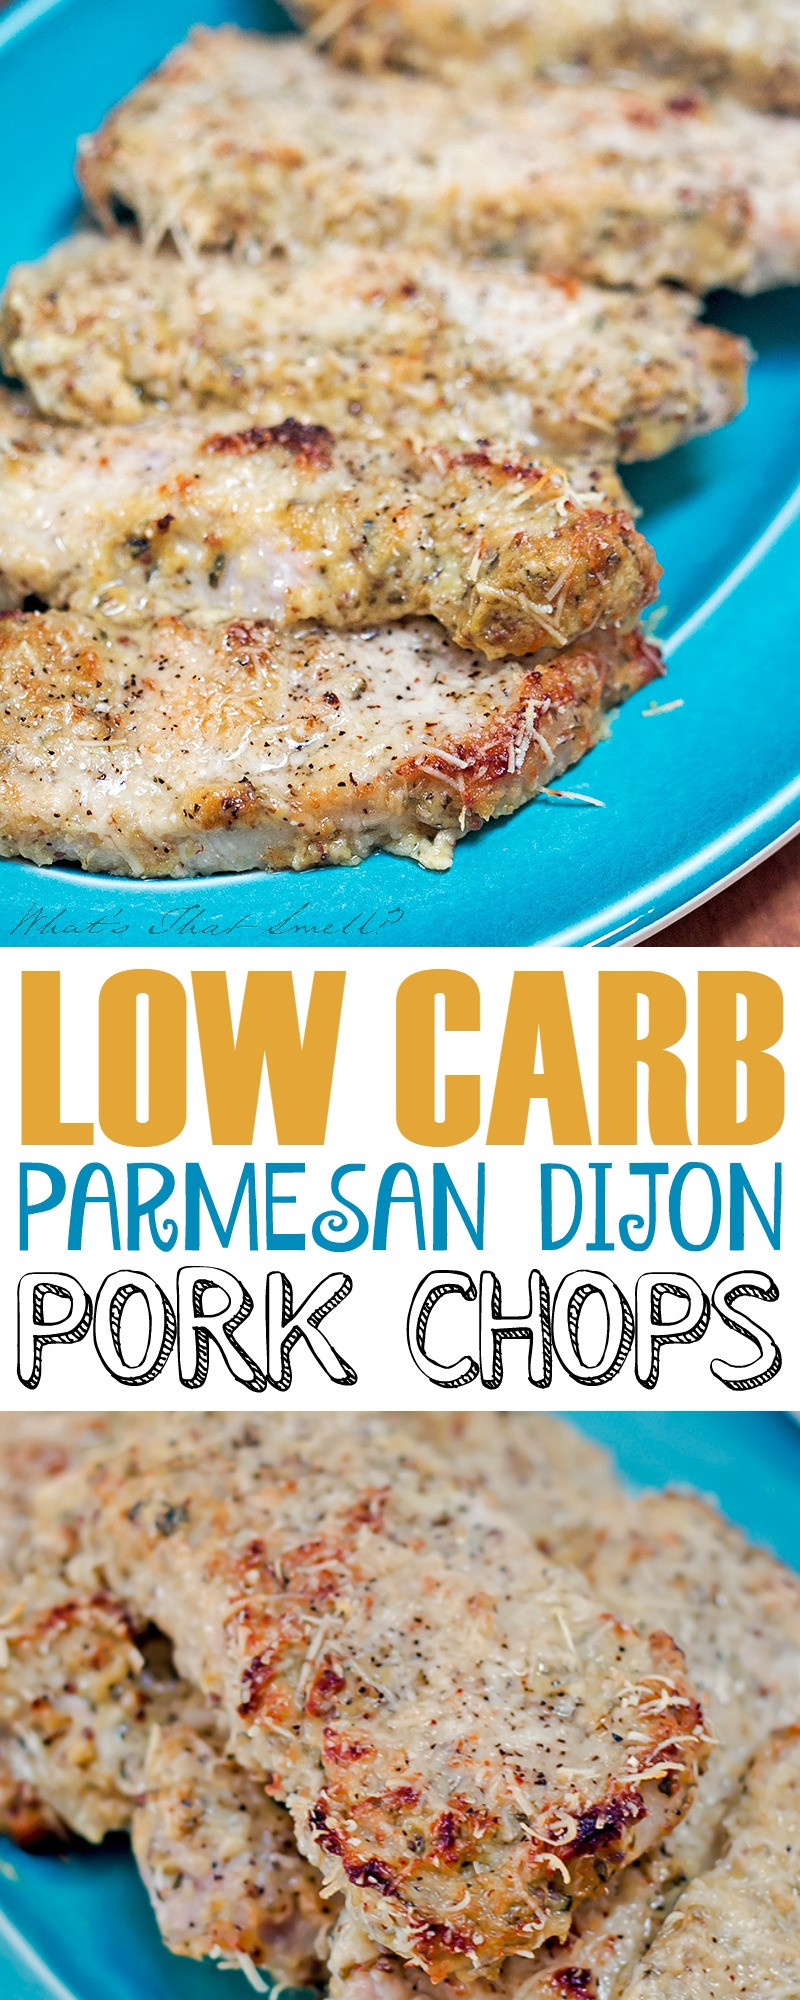 Low Carb Boneless Pork Chop Recipes
 Low Carb Parmesan Dijon Pork Chops 730 Sage Street